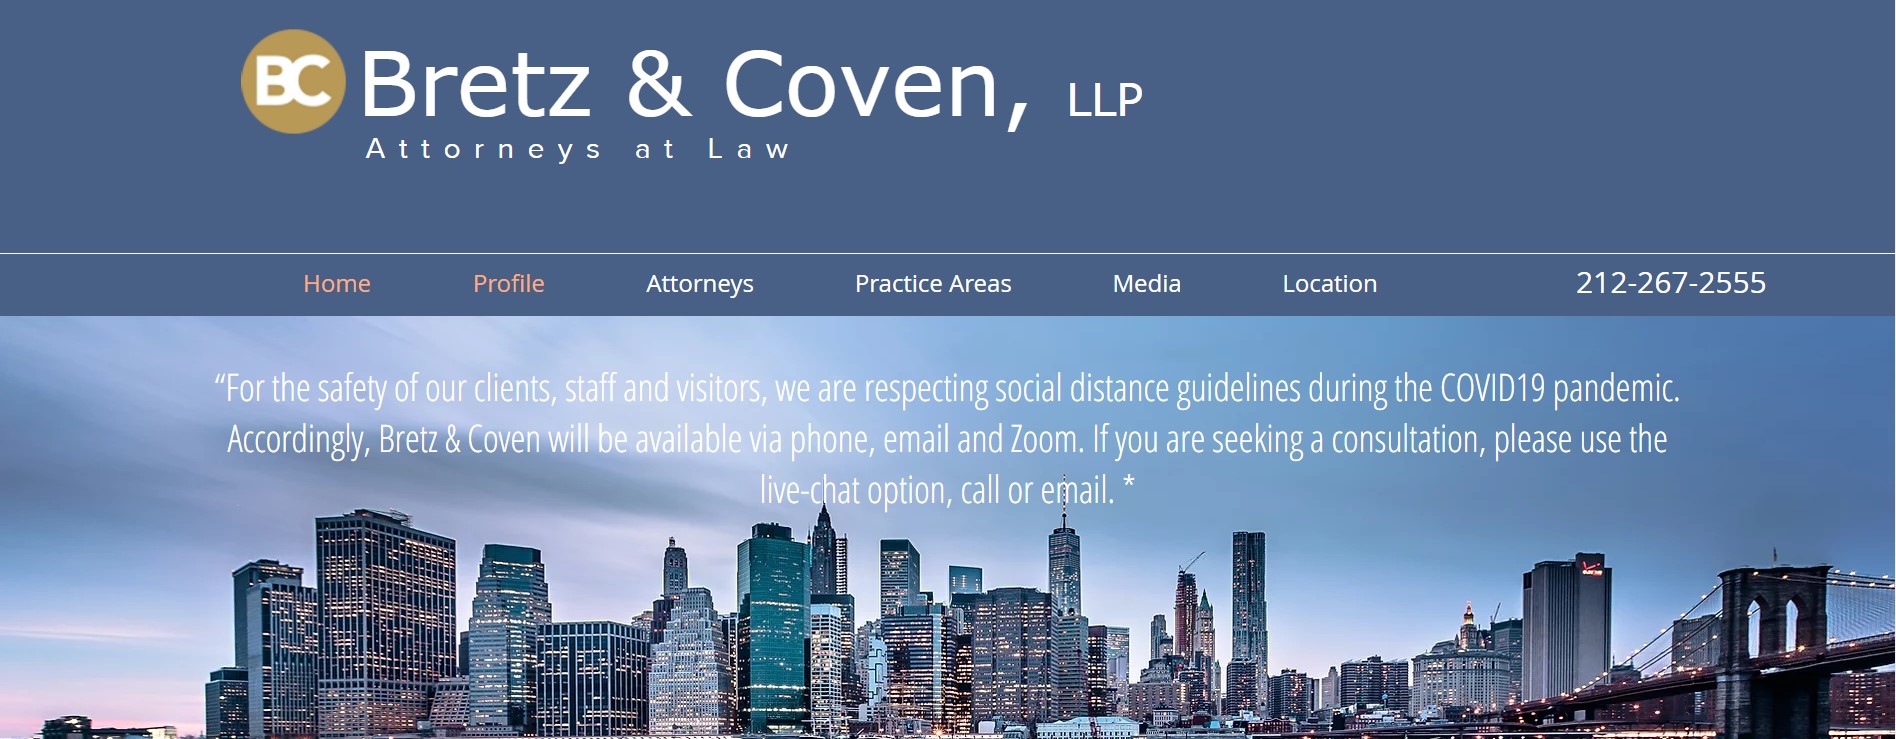 Bretz & Coven, LLP Attorneys at Law